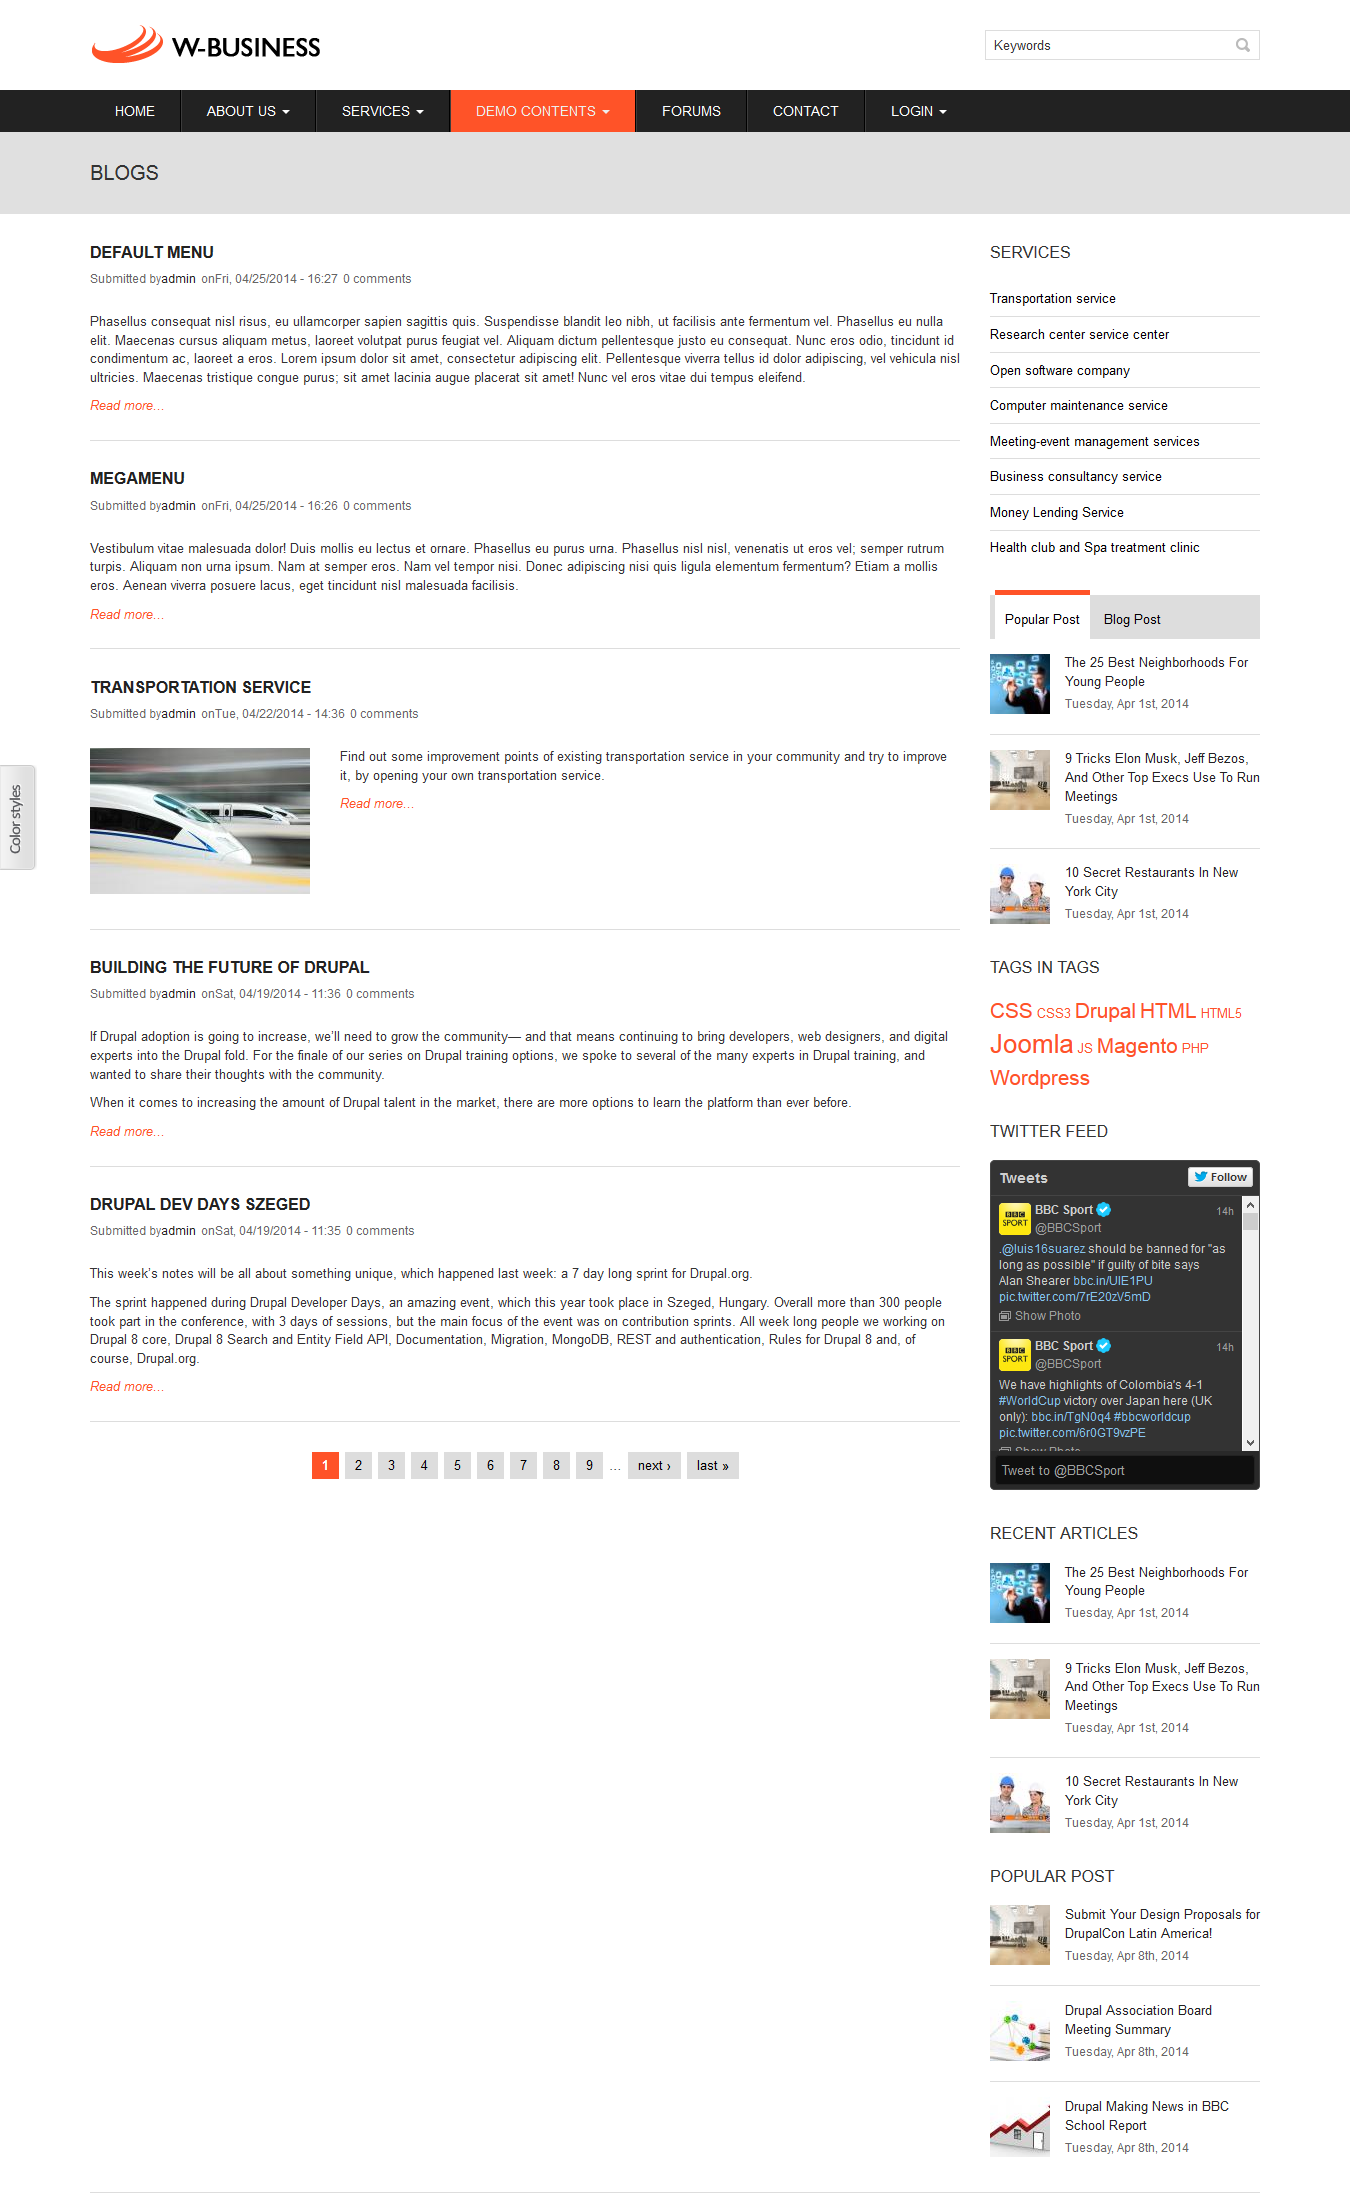 Blogs display